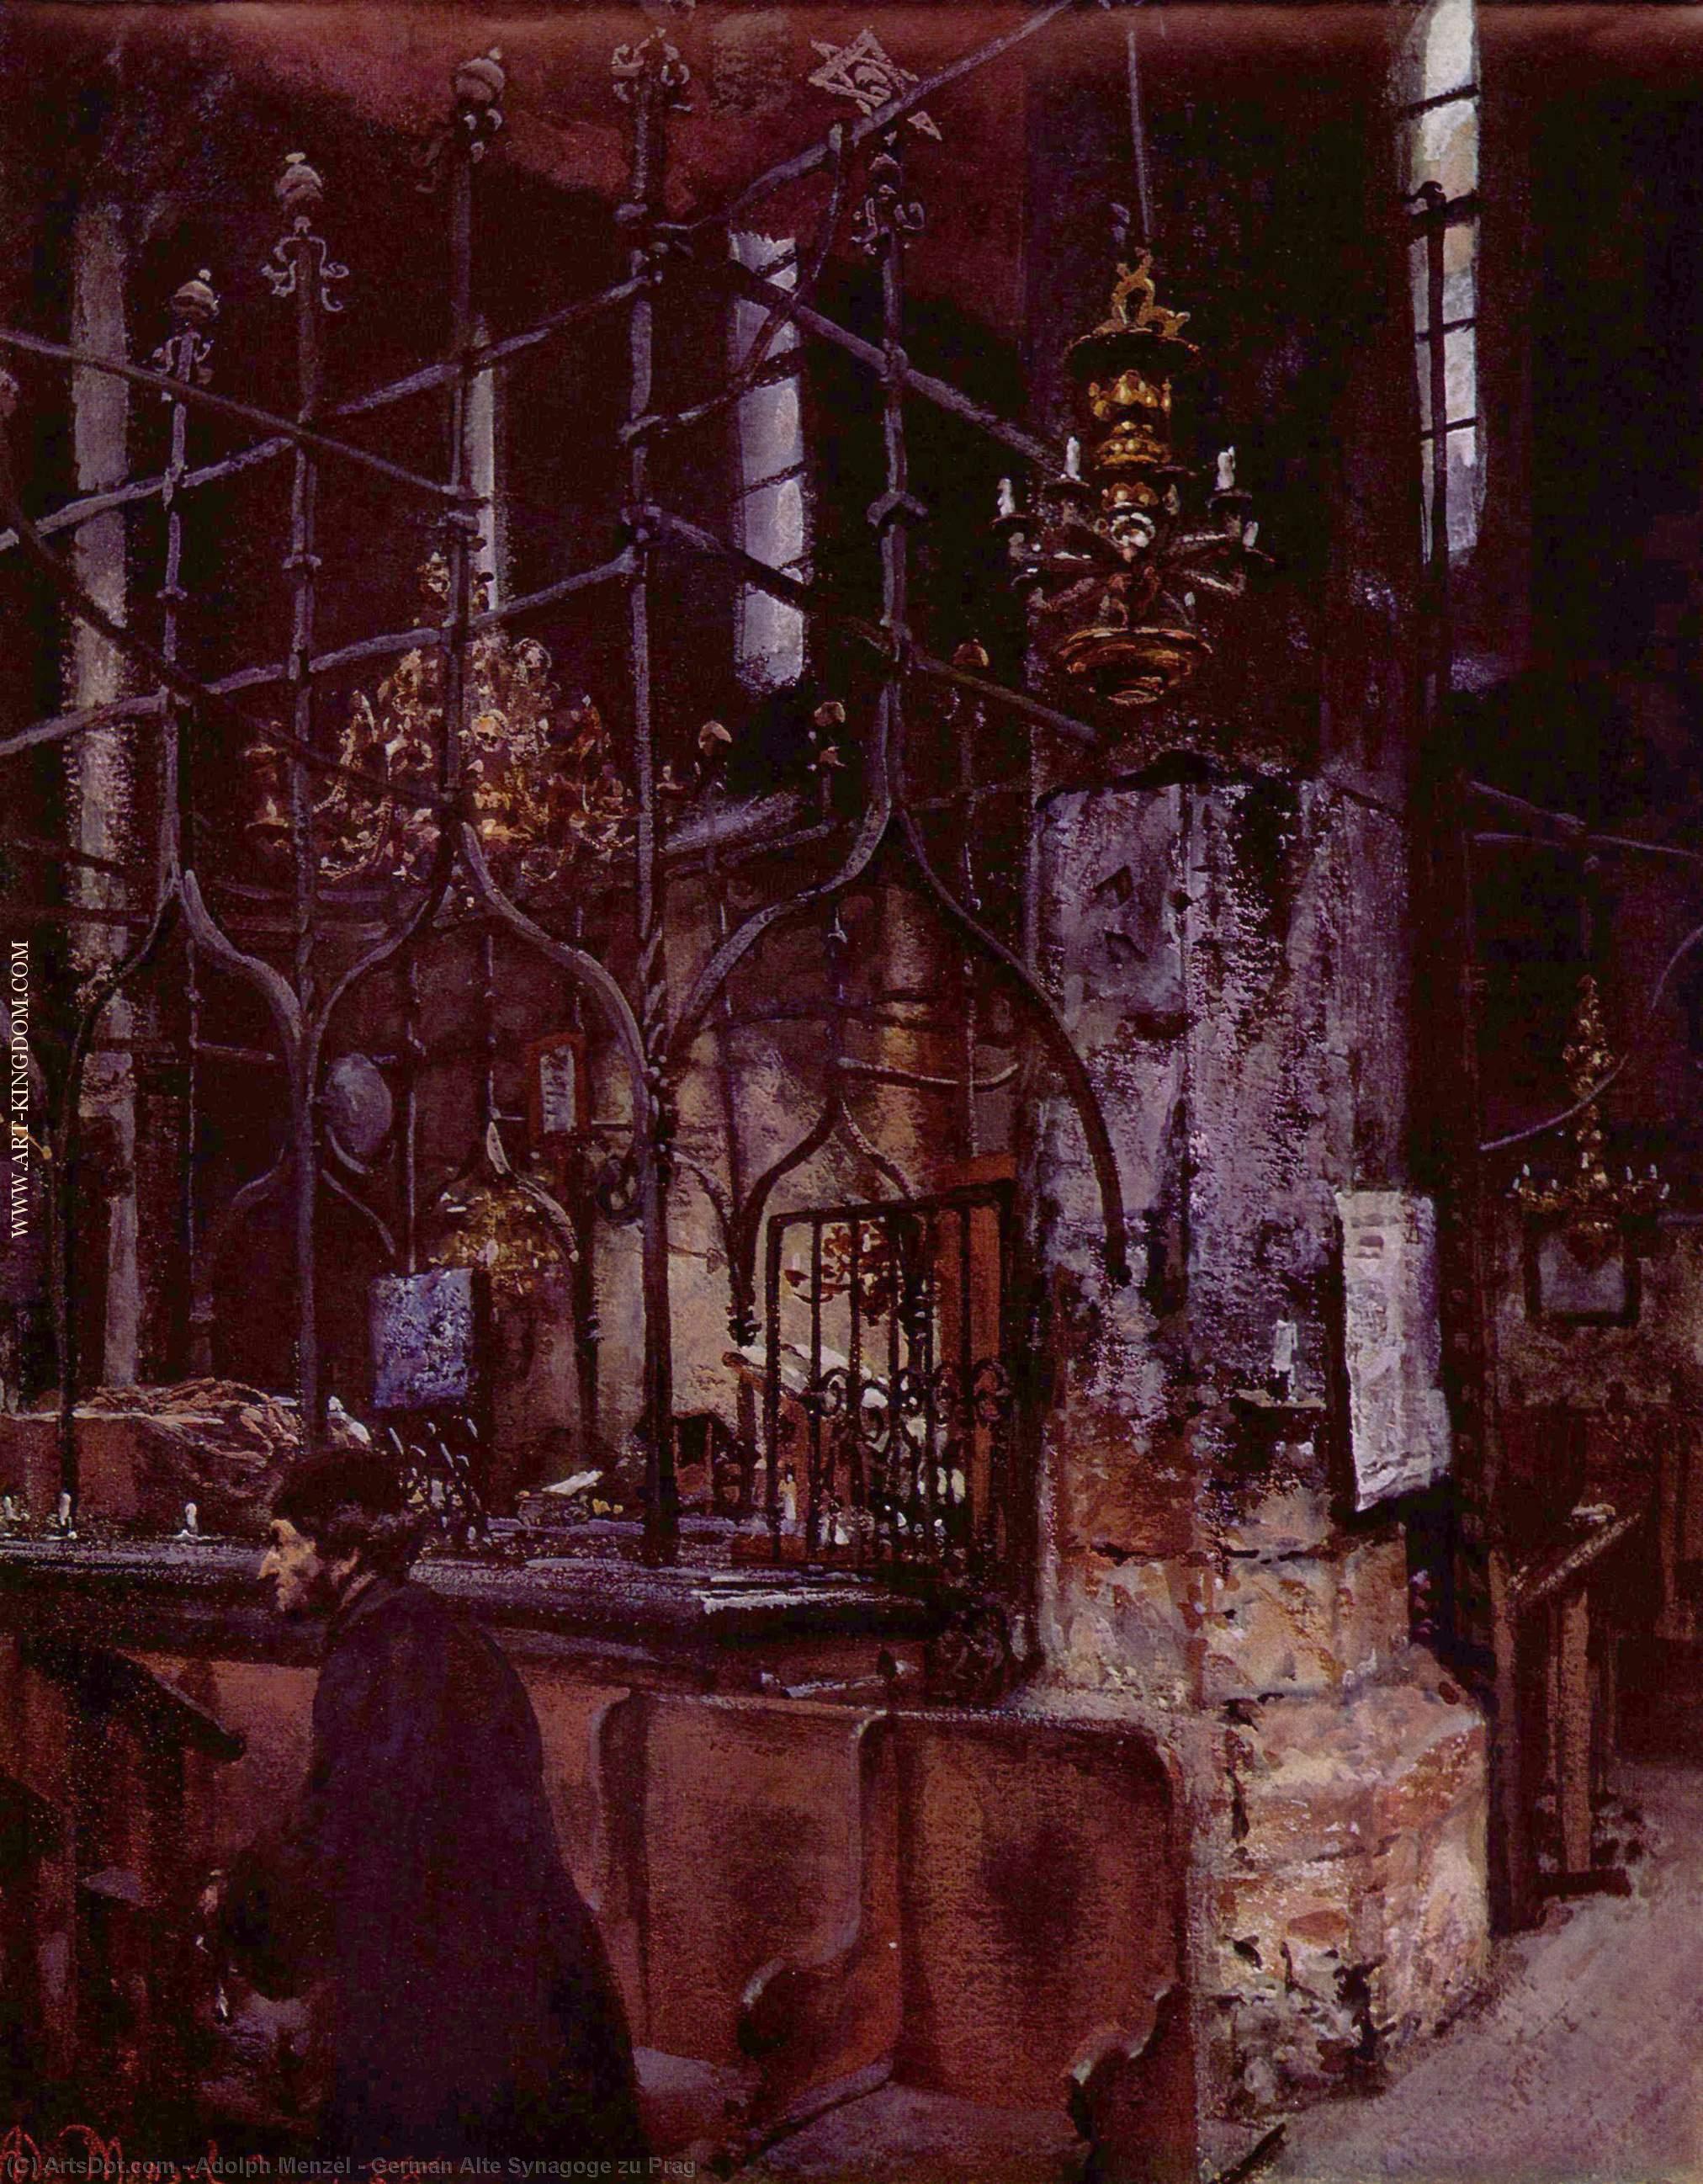 Wikioo.org – L'Encyclopédie des Beaux Arts - Peinture, Oeuvre de Adolph Menzel - Allemand alte synagoge zu prag